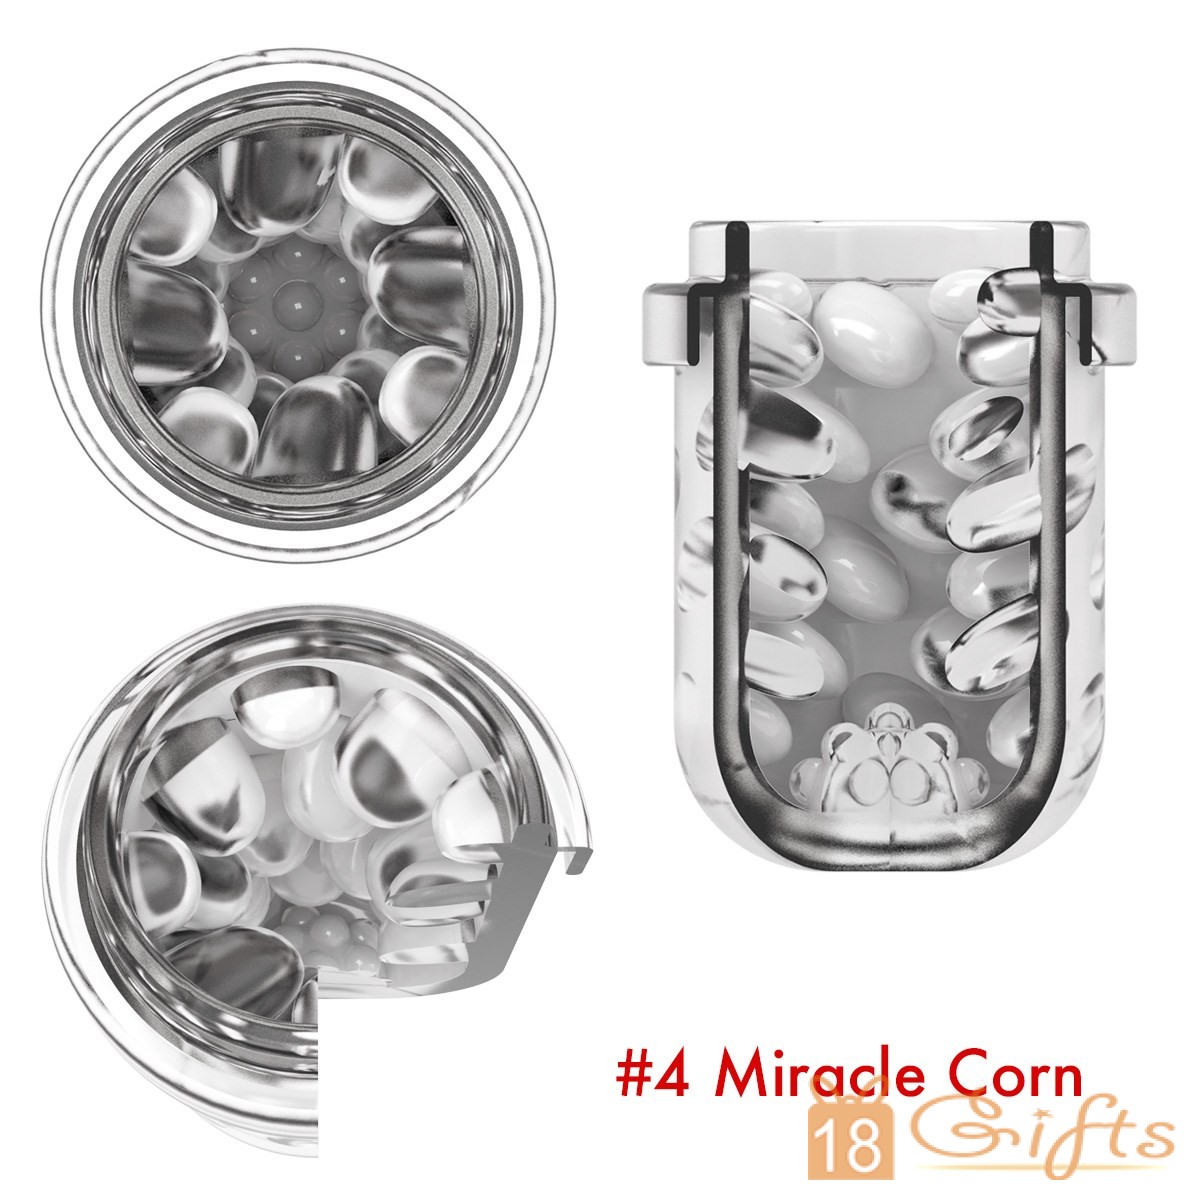 Cyclone X10專用 - Miracle Corn